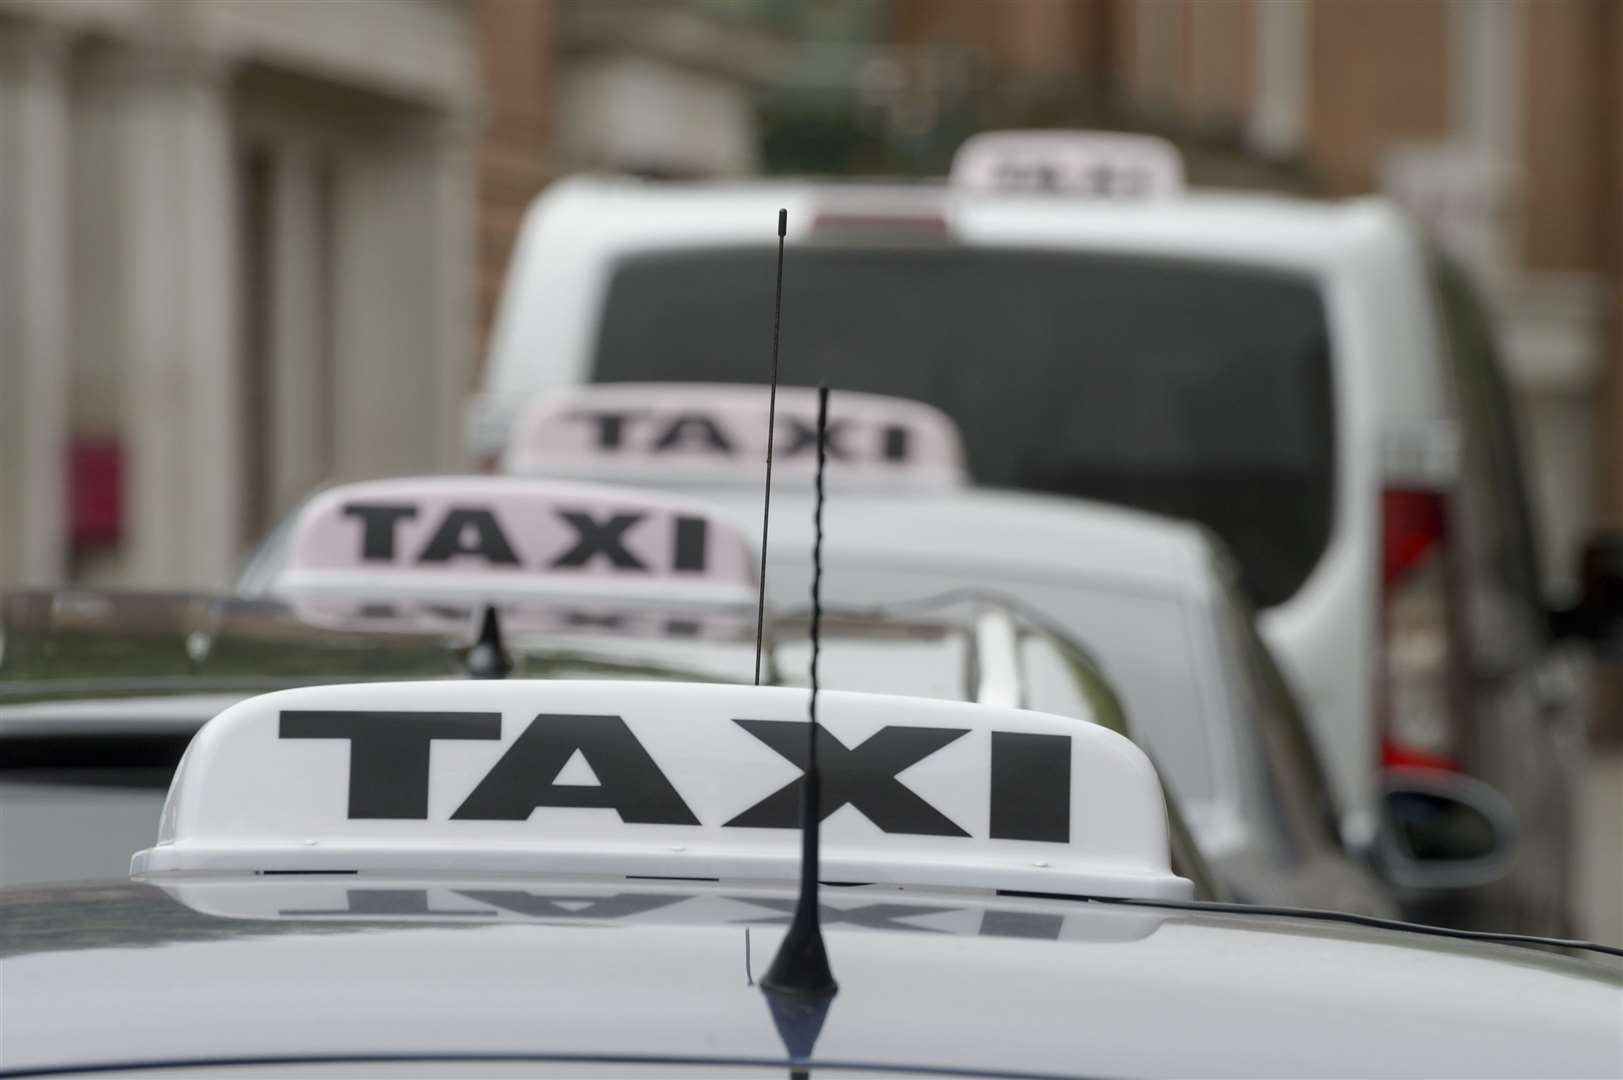 Stock photo of taxi ranks